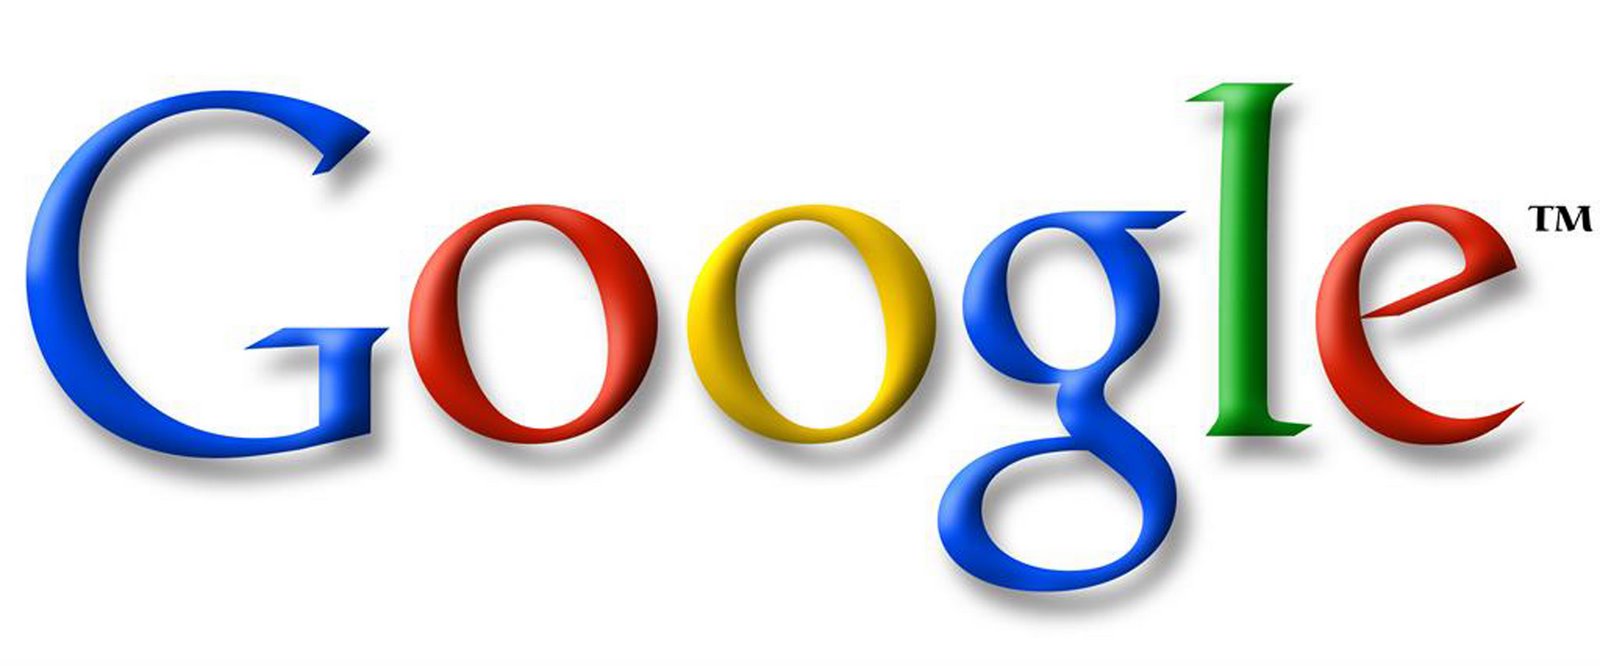 logo de Google grande